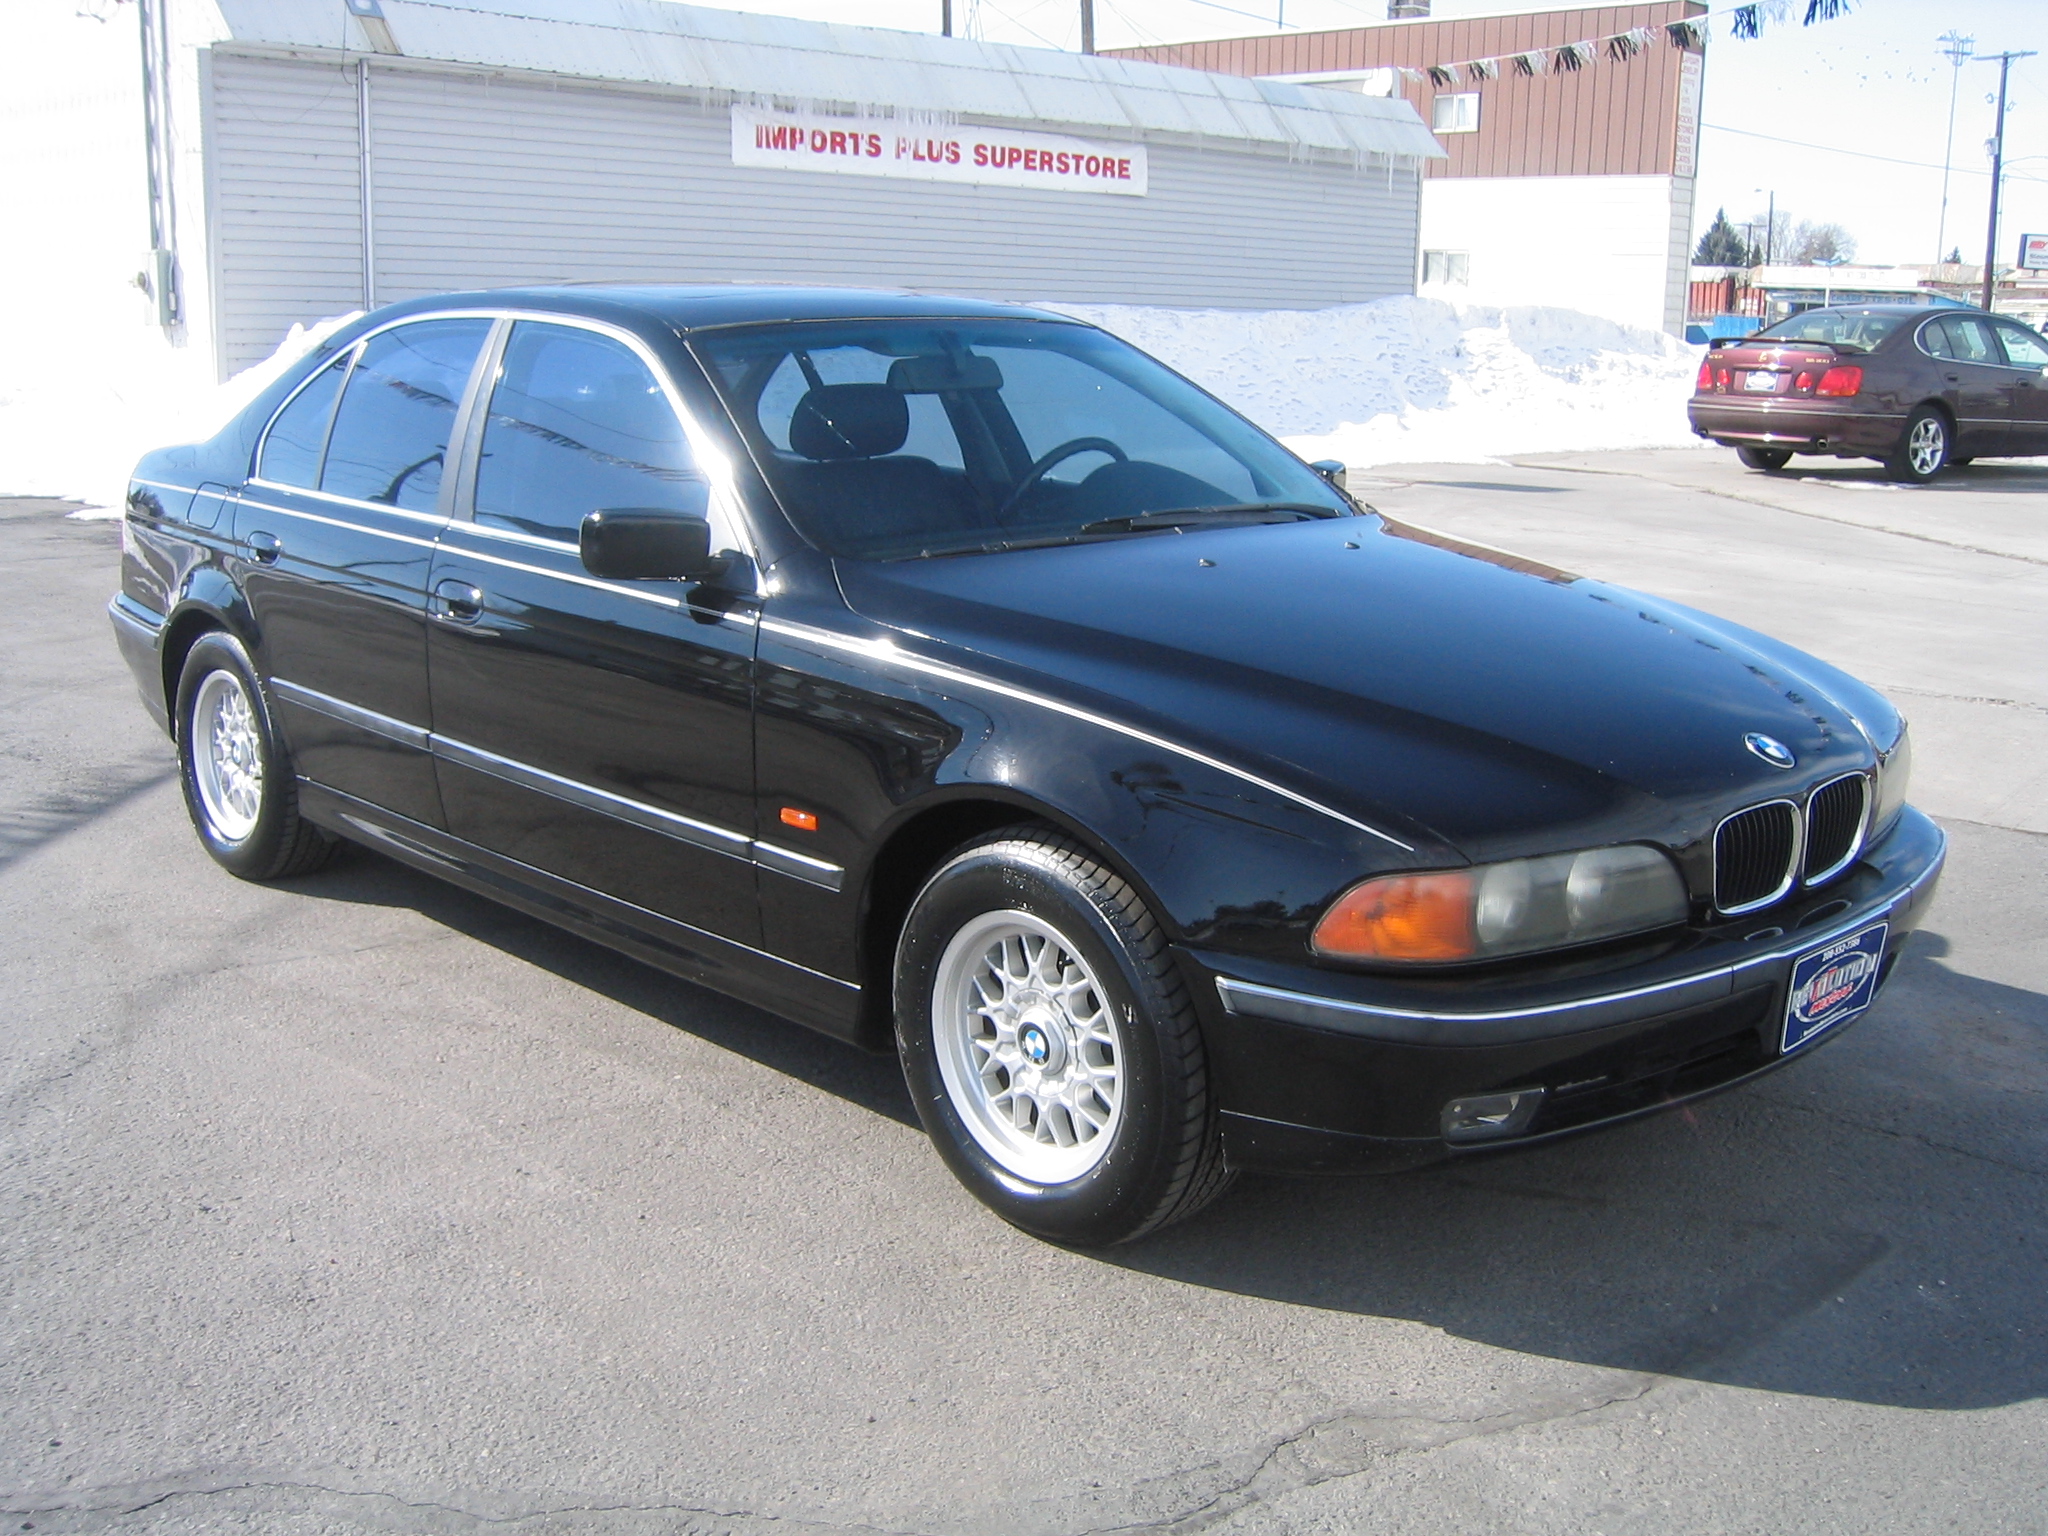 1997 BMW 528i. VIN: 1GYEK63NX5R104471 Stock #: 1184. View Photos & Specs.